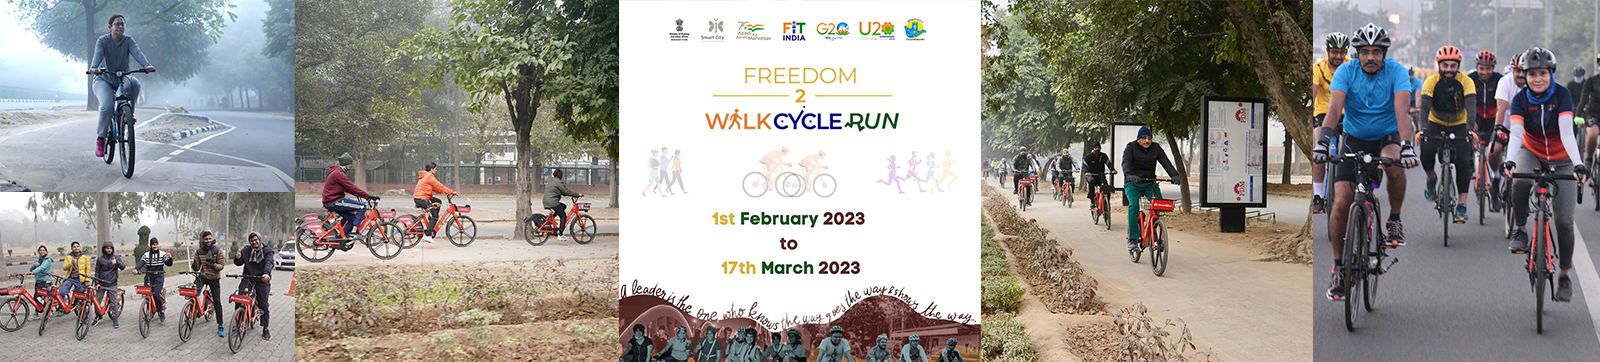 Chandigarh UT Officials Take Up 45-Day Freedom2 Walk, Cycle, Run Challenge